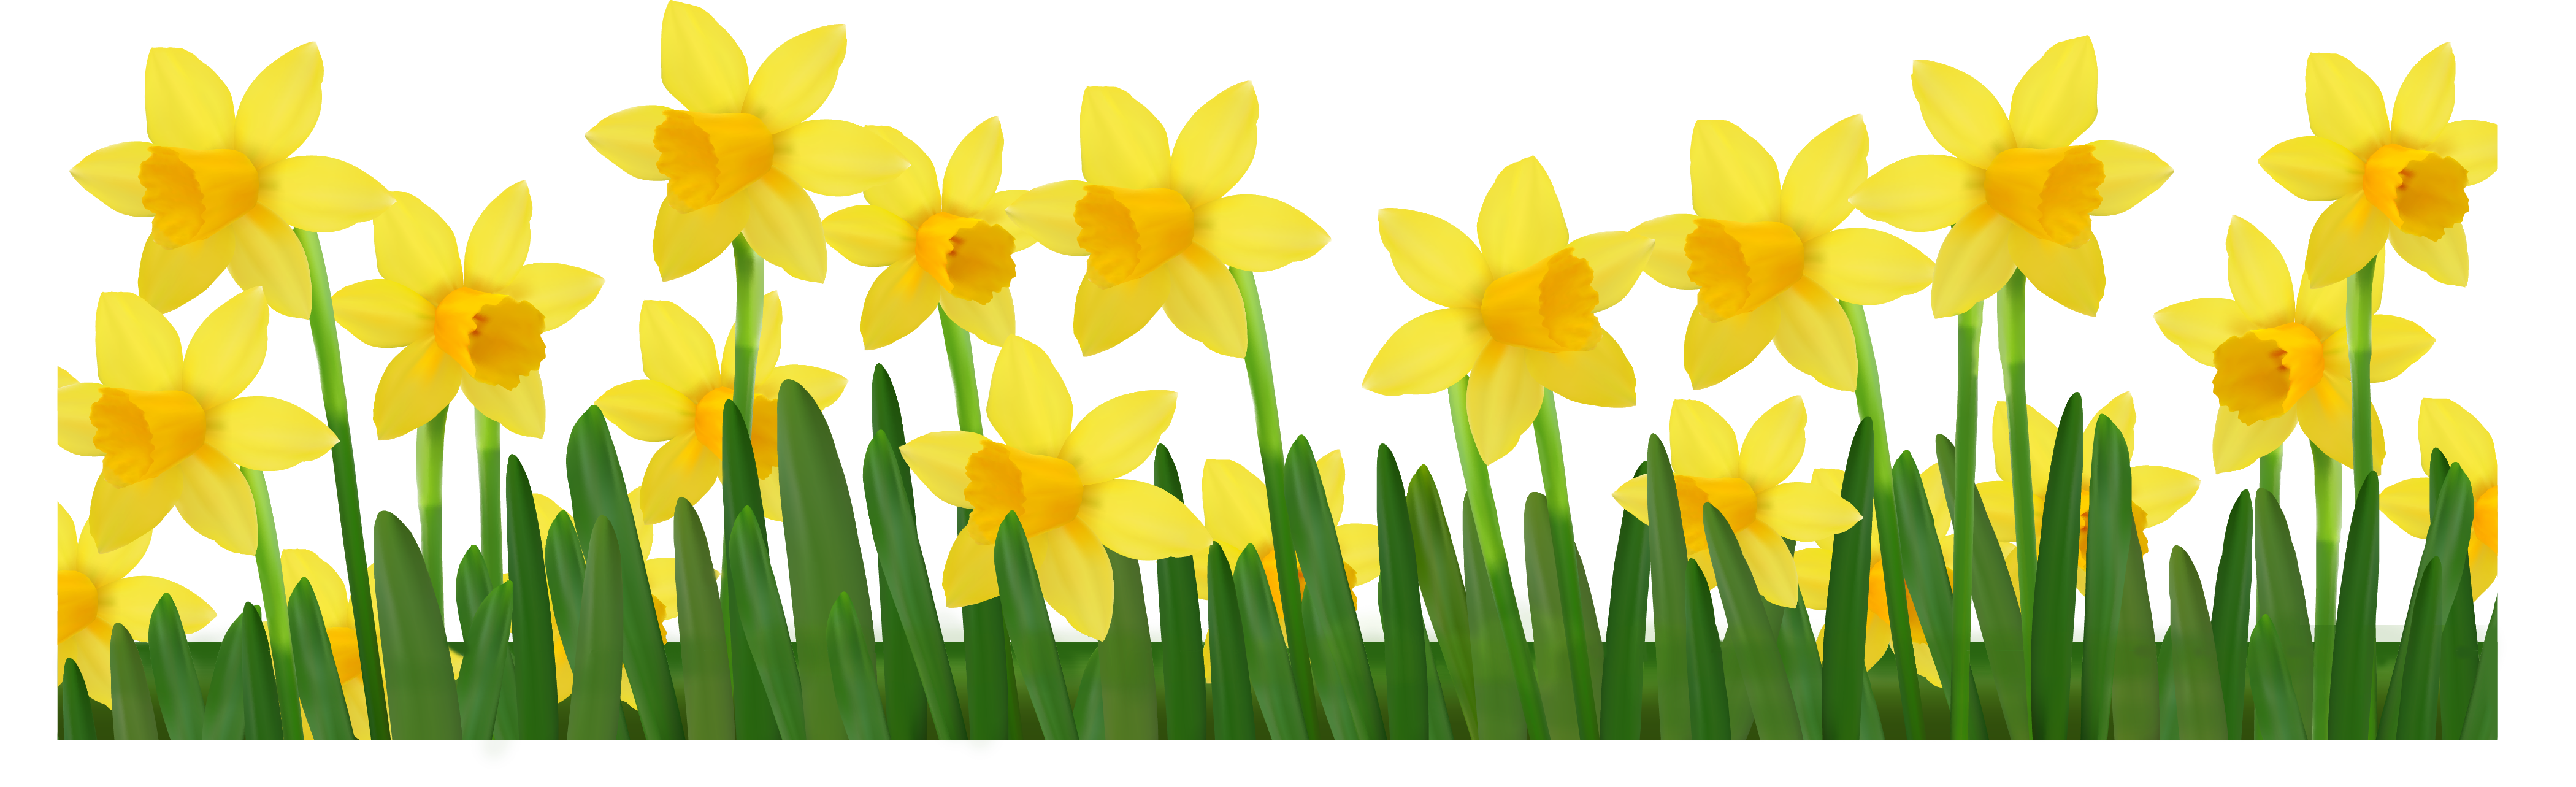 free clip art daffodil flowers - photo #19